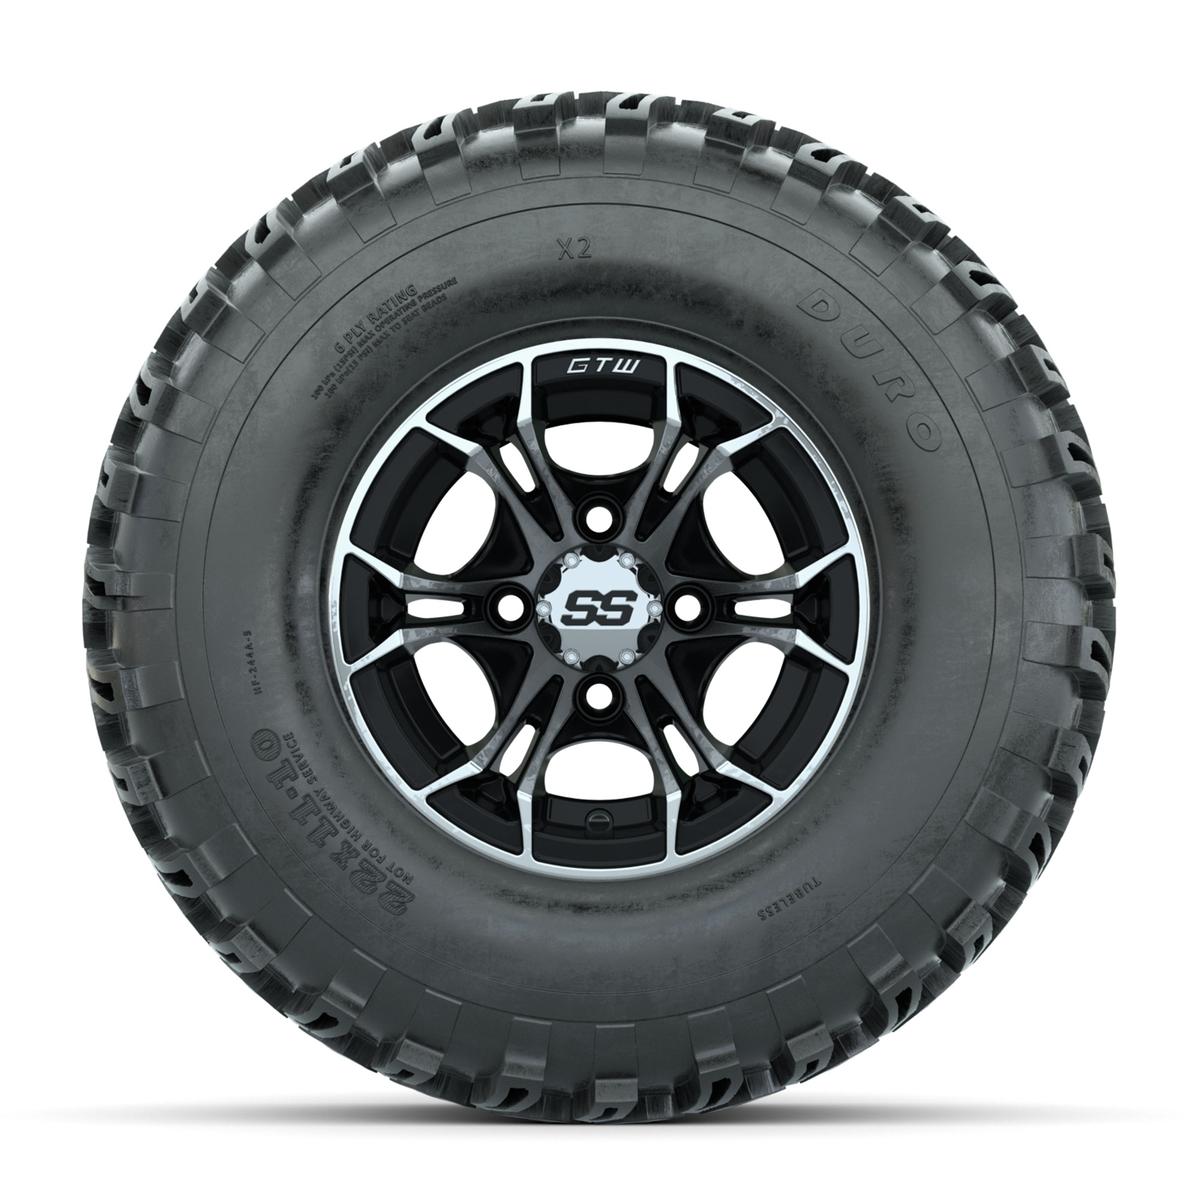 GTW Spyder Machined/Black 10 in Wheels with 22x11-10 Duro Desert All Terrain Tires – Full Set